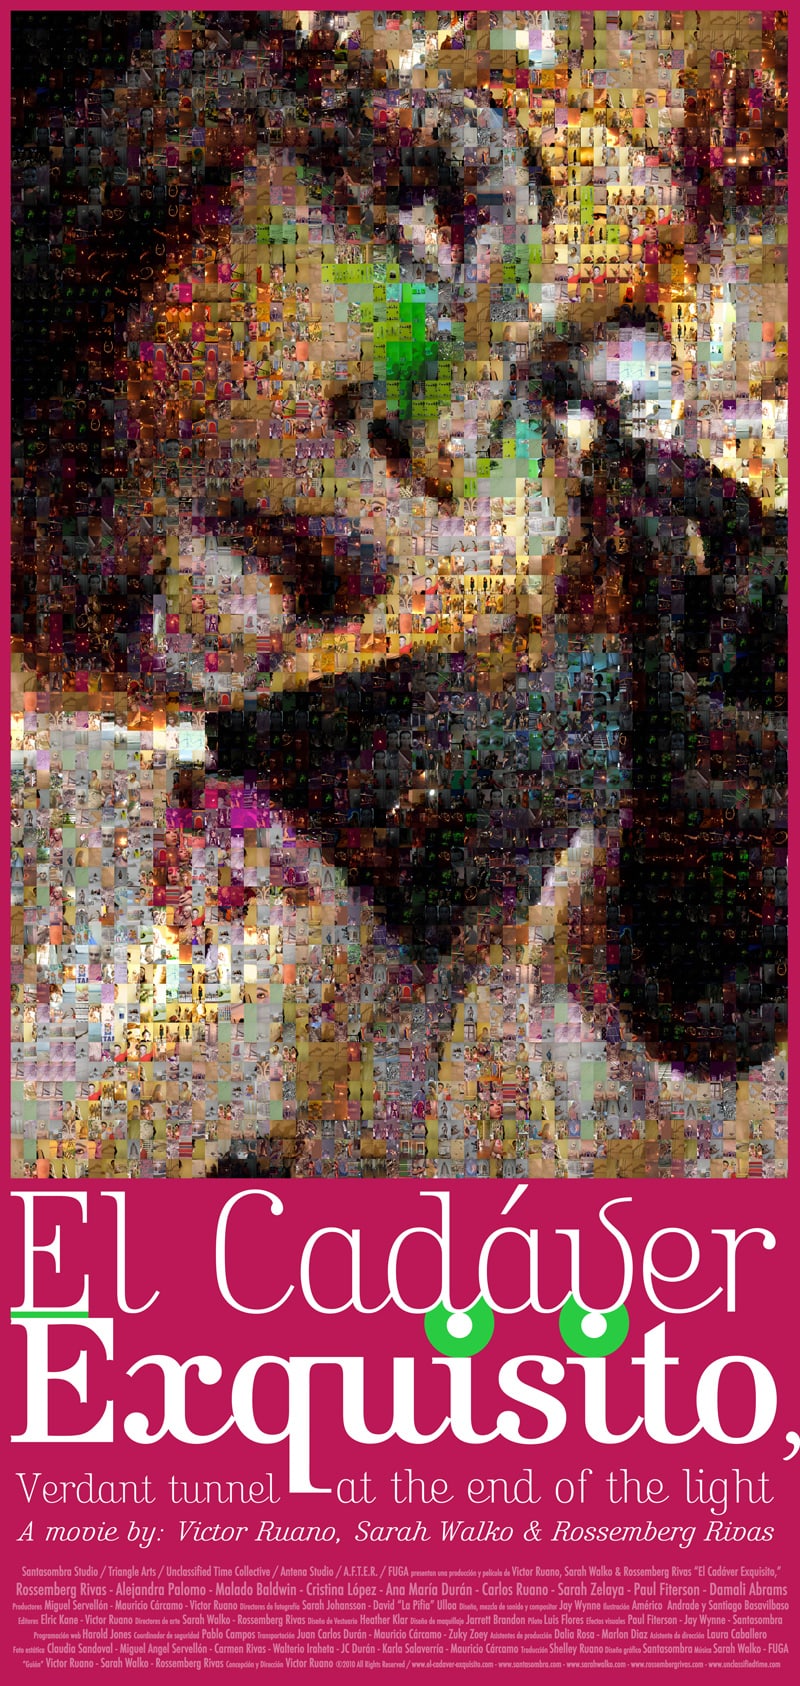 El-Cadaver-Exquisito-mosaic-poster02-victor-ruano-santasombra